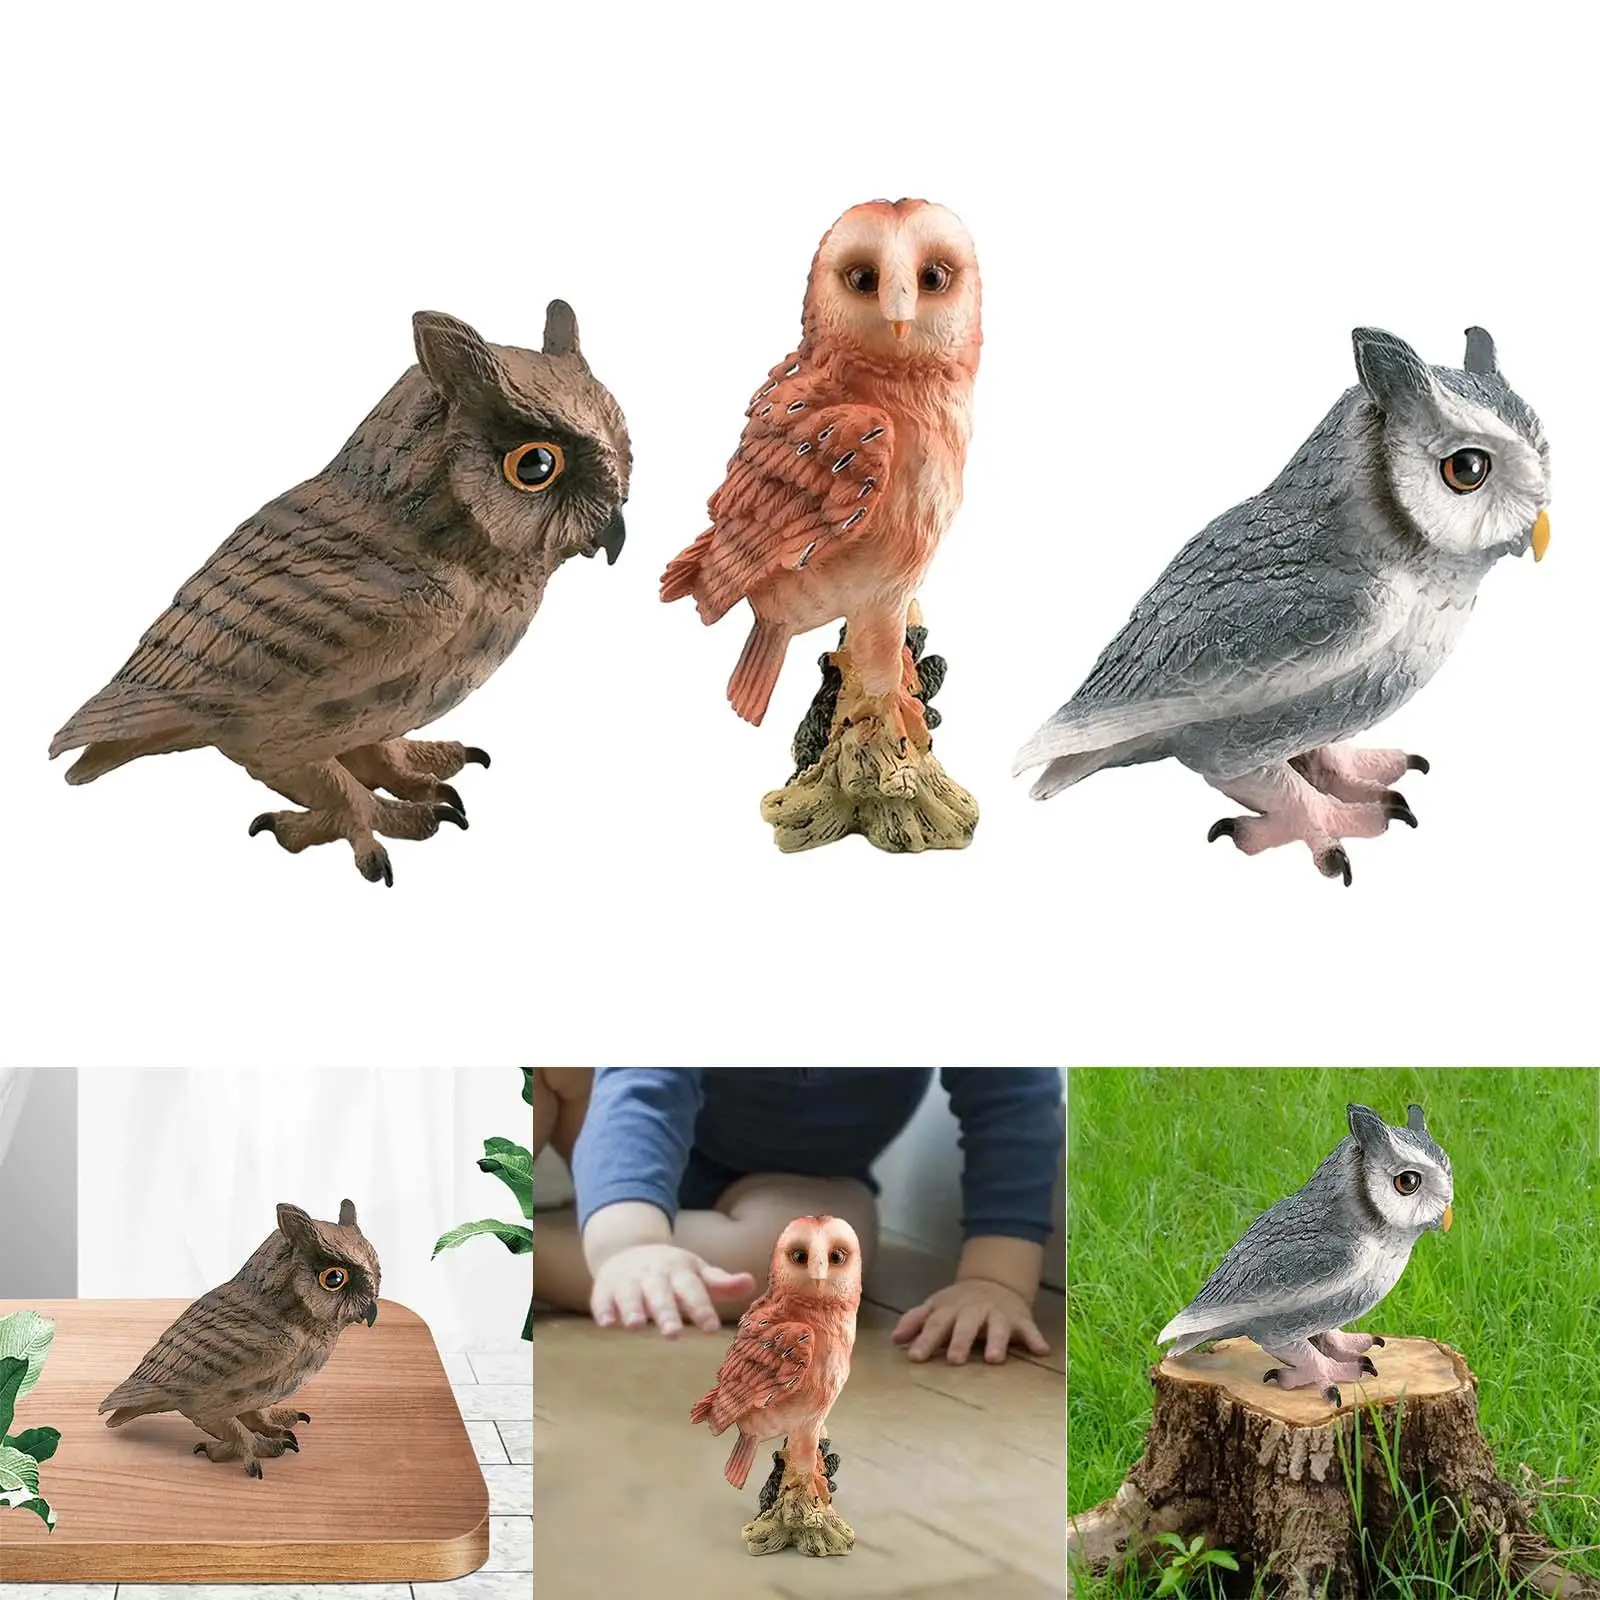 Simulation Owl Model Desktop Decor Small Owlfigures Toy for Garden Yard Decors Decor Desktop Decoration Birthday Gift Ornaments